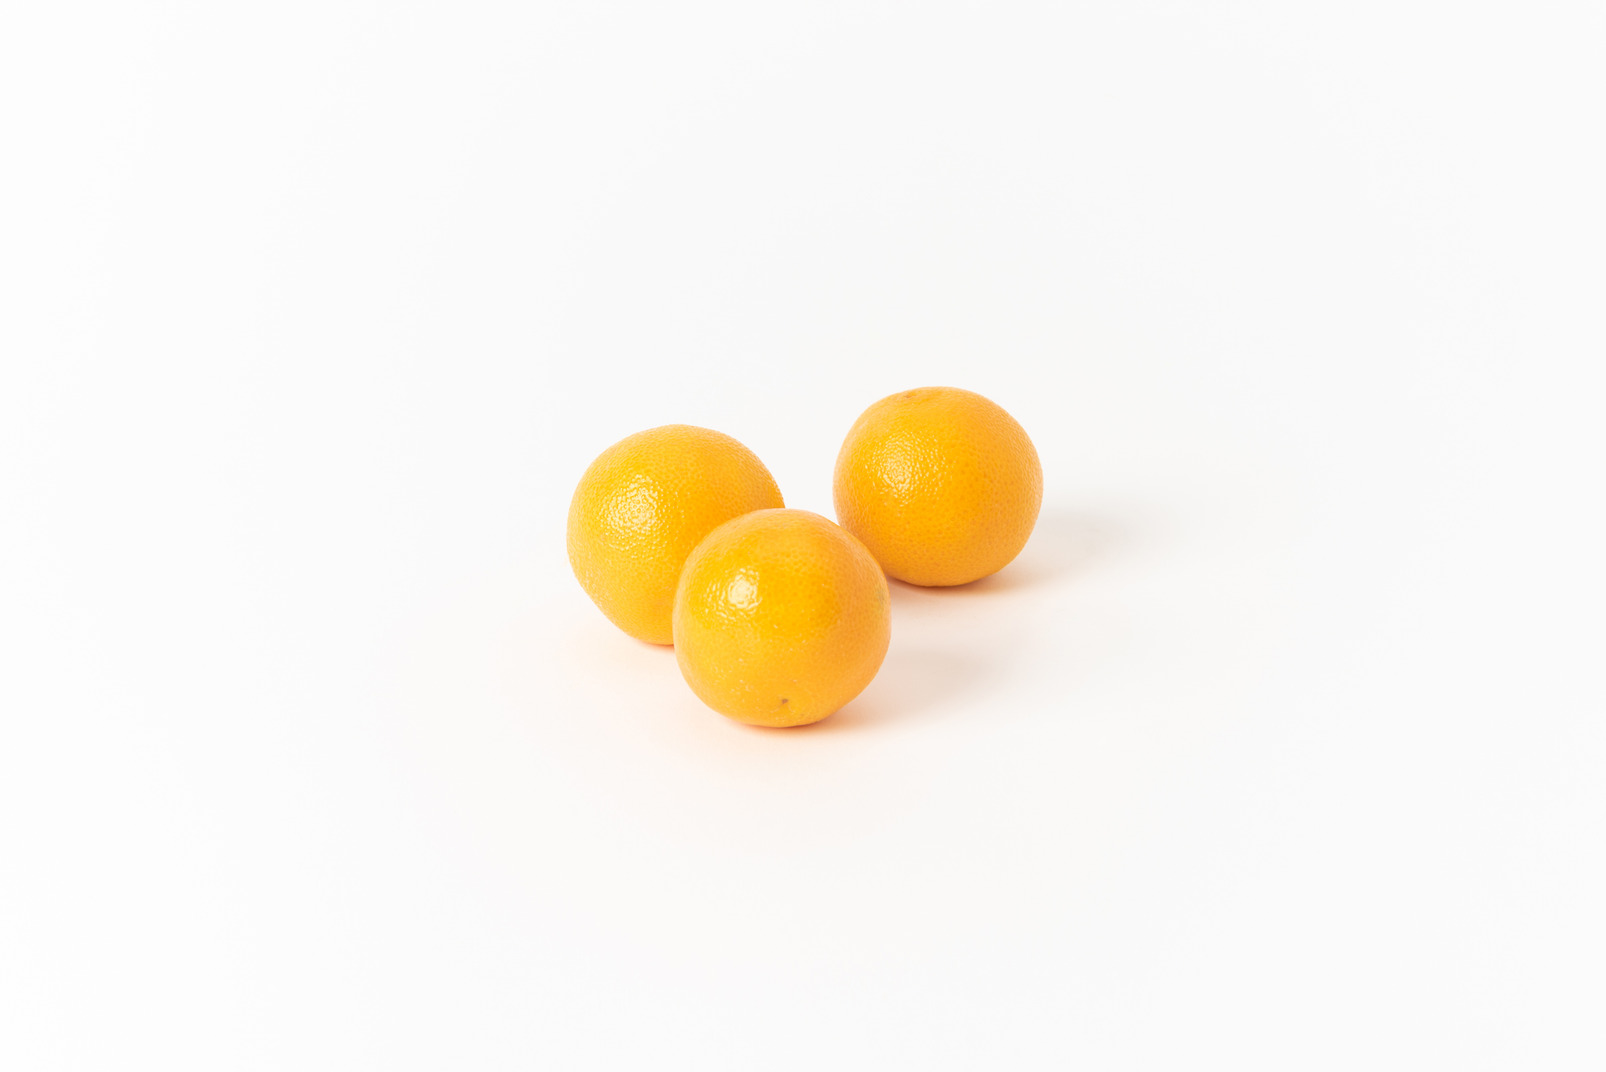 Three oranges on white background